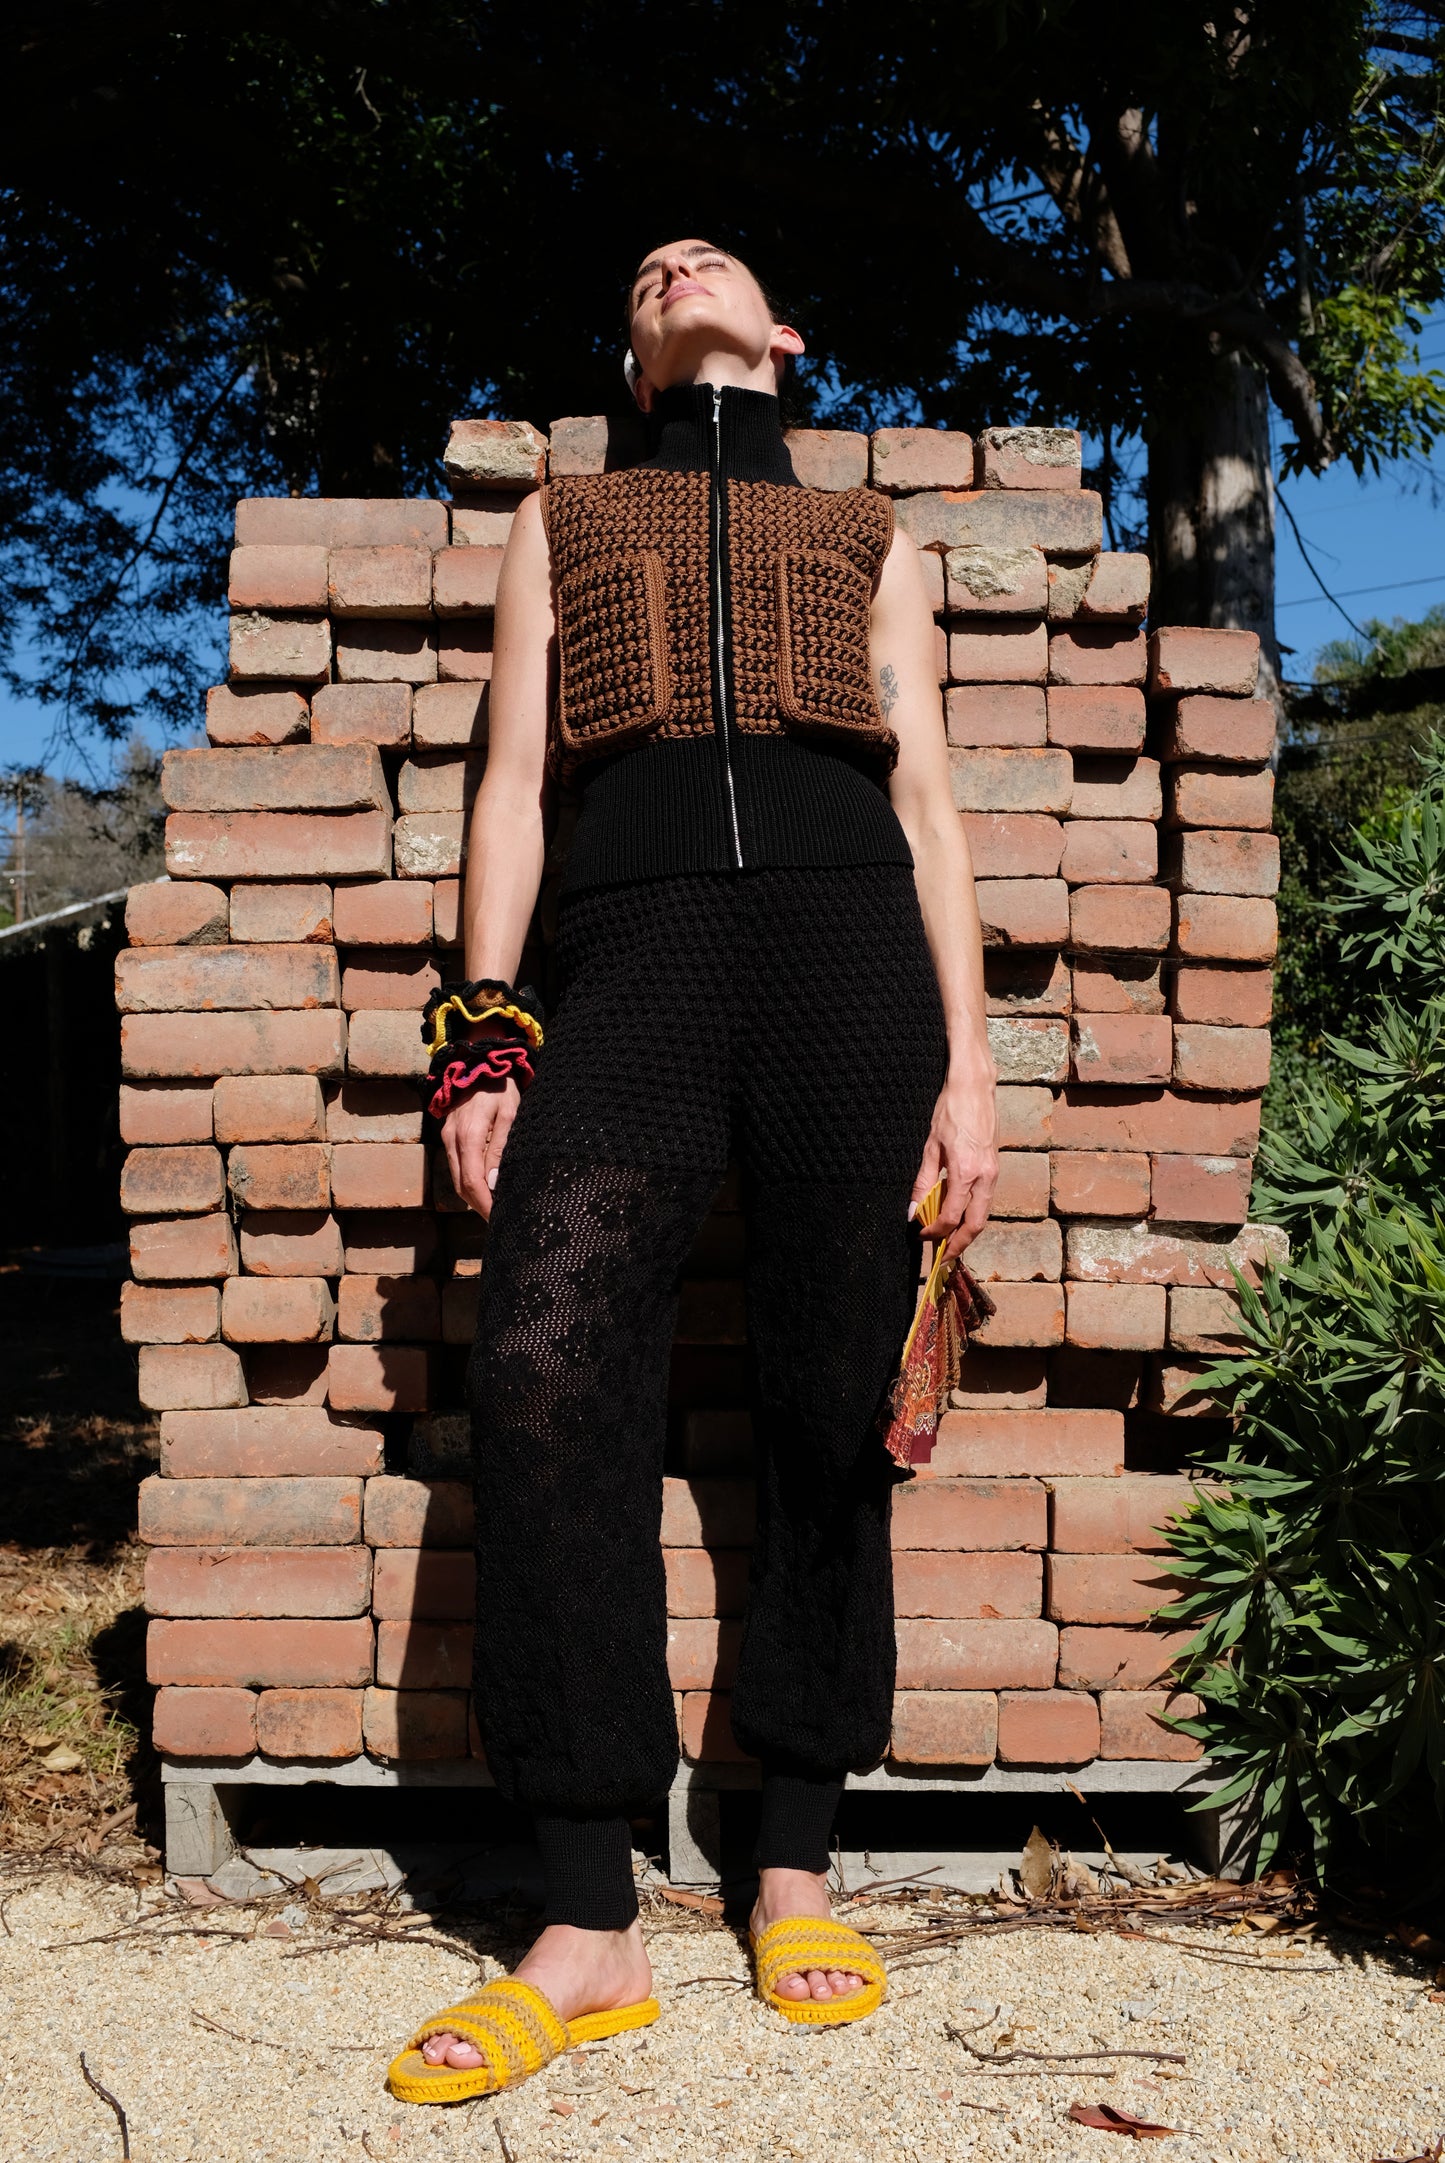 Beklina Marta Crochet Vest Black/Castagna